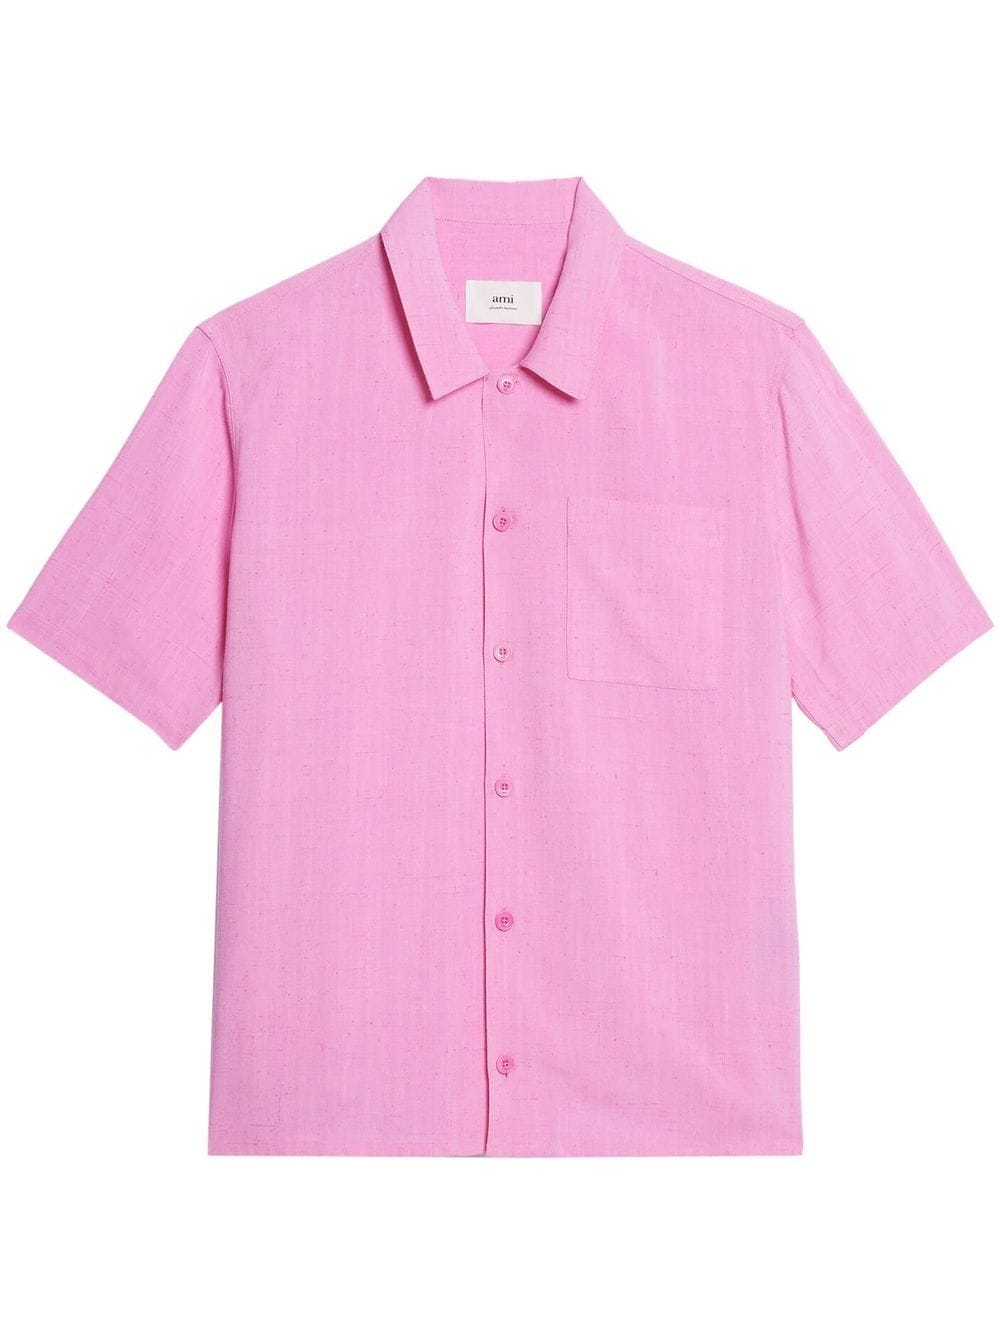 AMI Paris short-sleeve shirt - Pink von AMI Paris